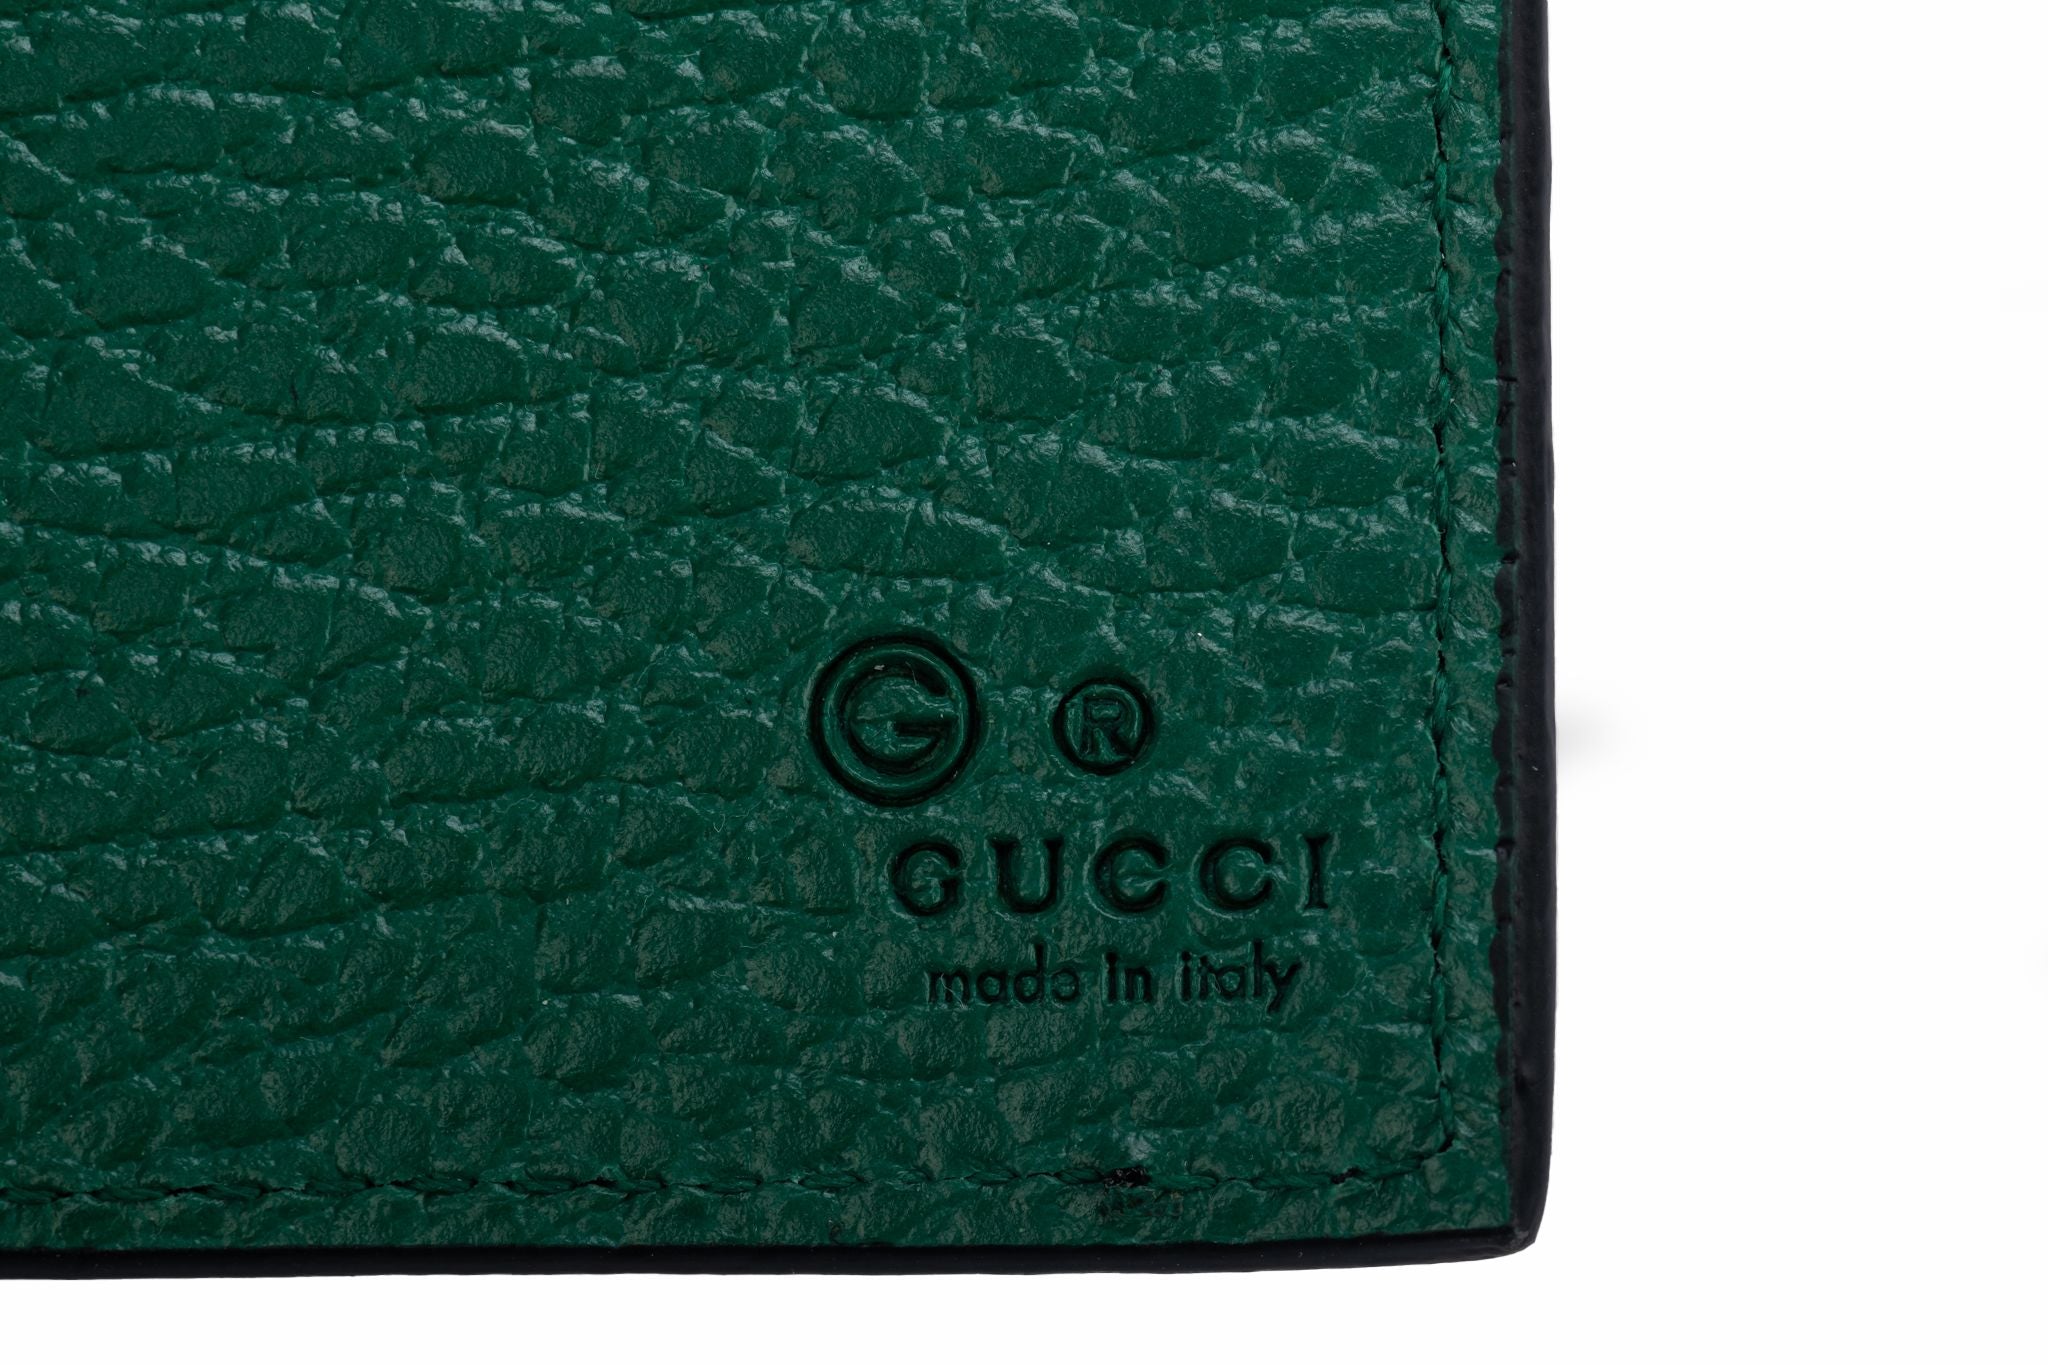 Gucci Men's Original GG Bifold Wallet